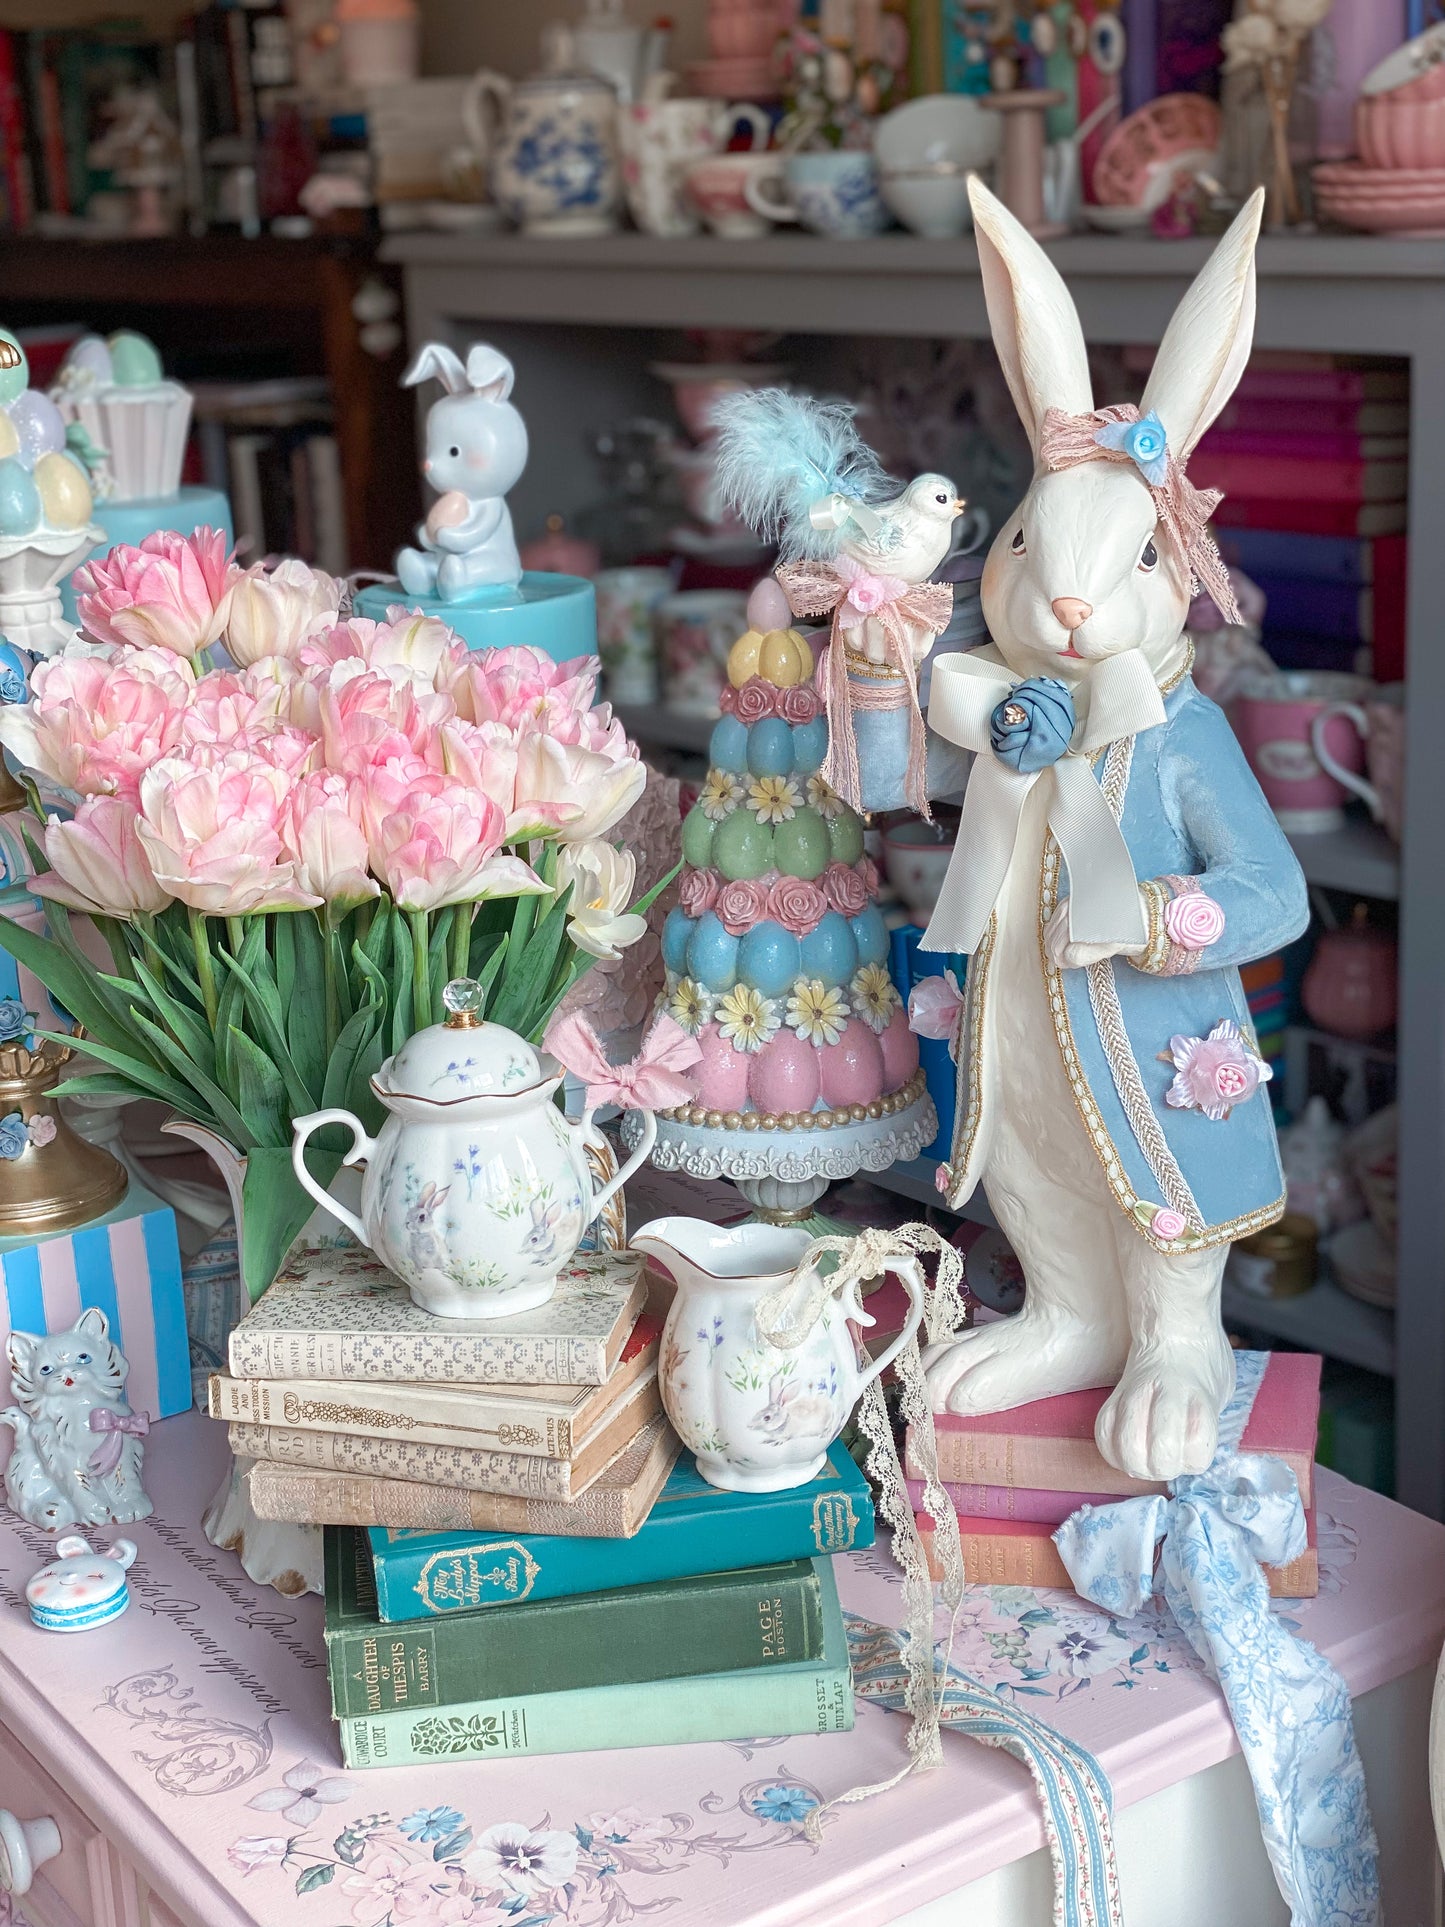 Sugar and Creamer set with watercolor bunny scene